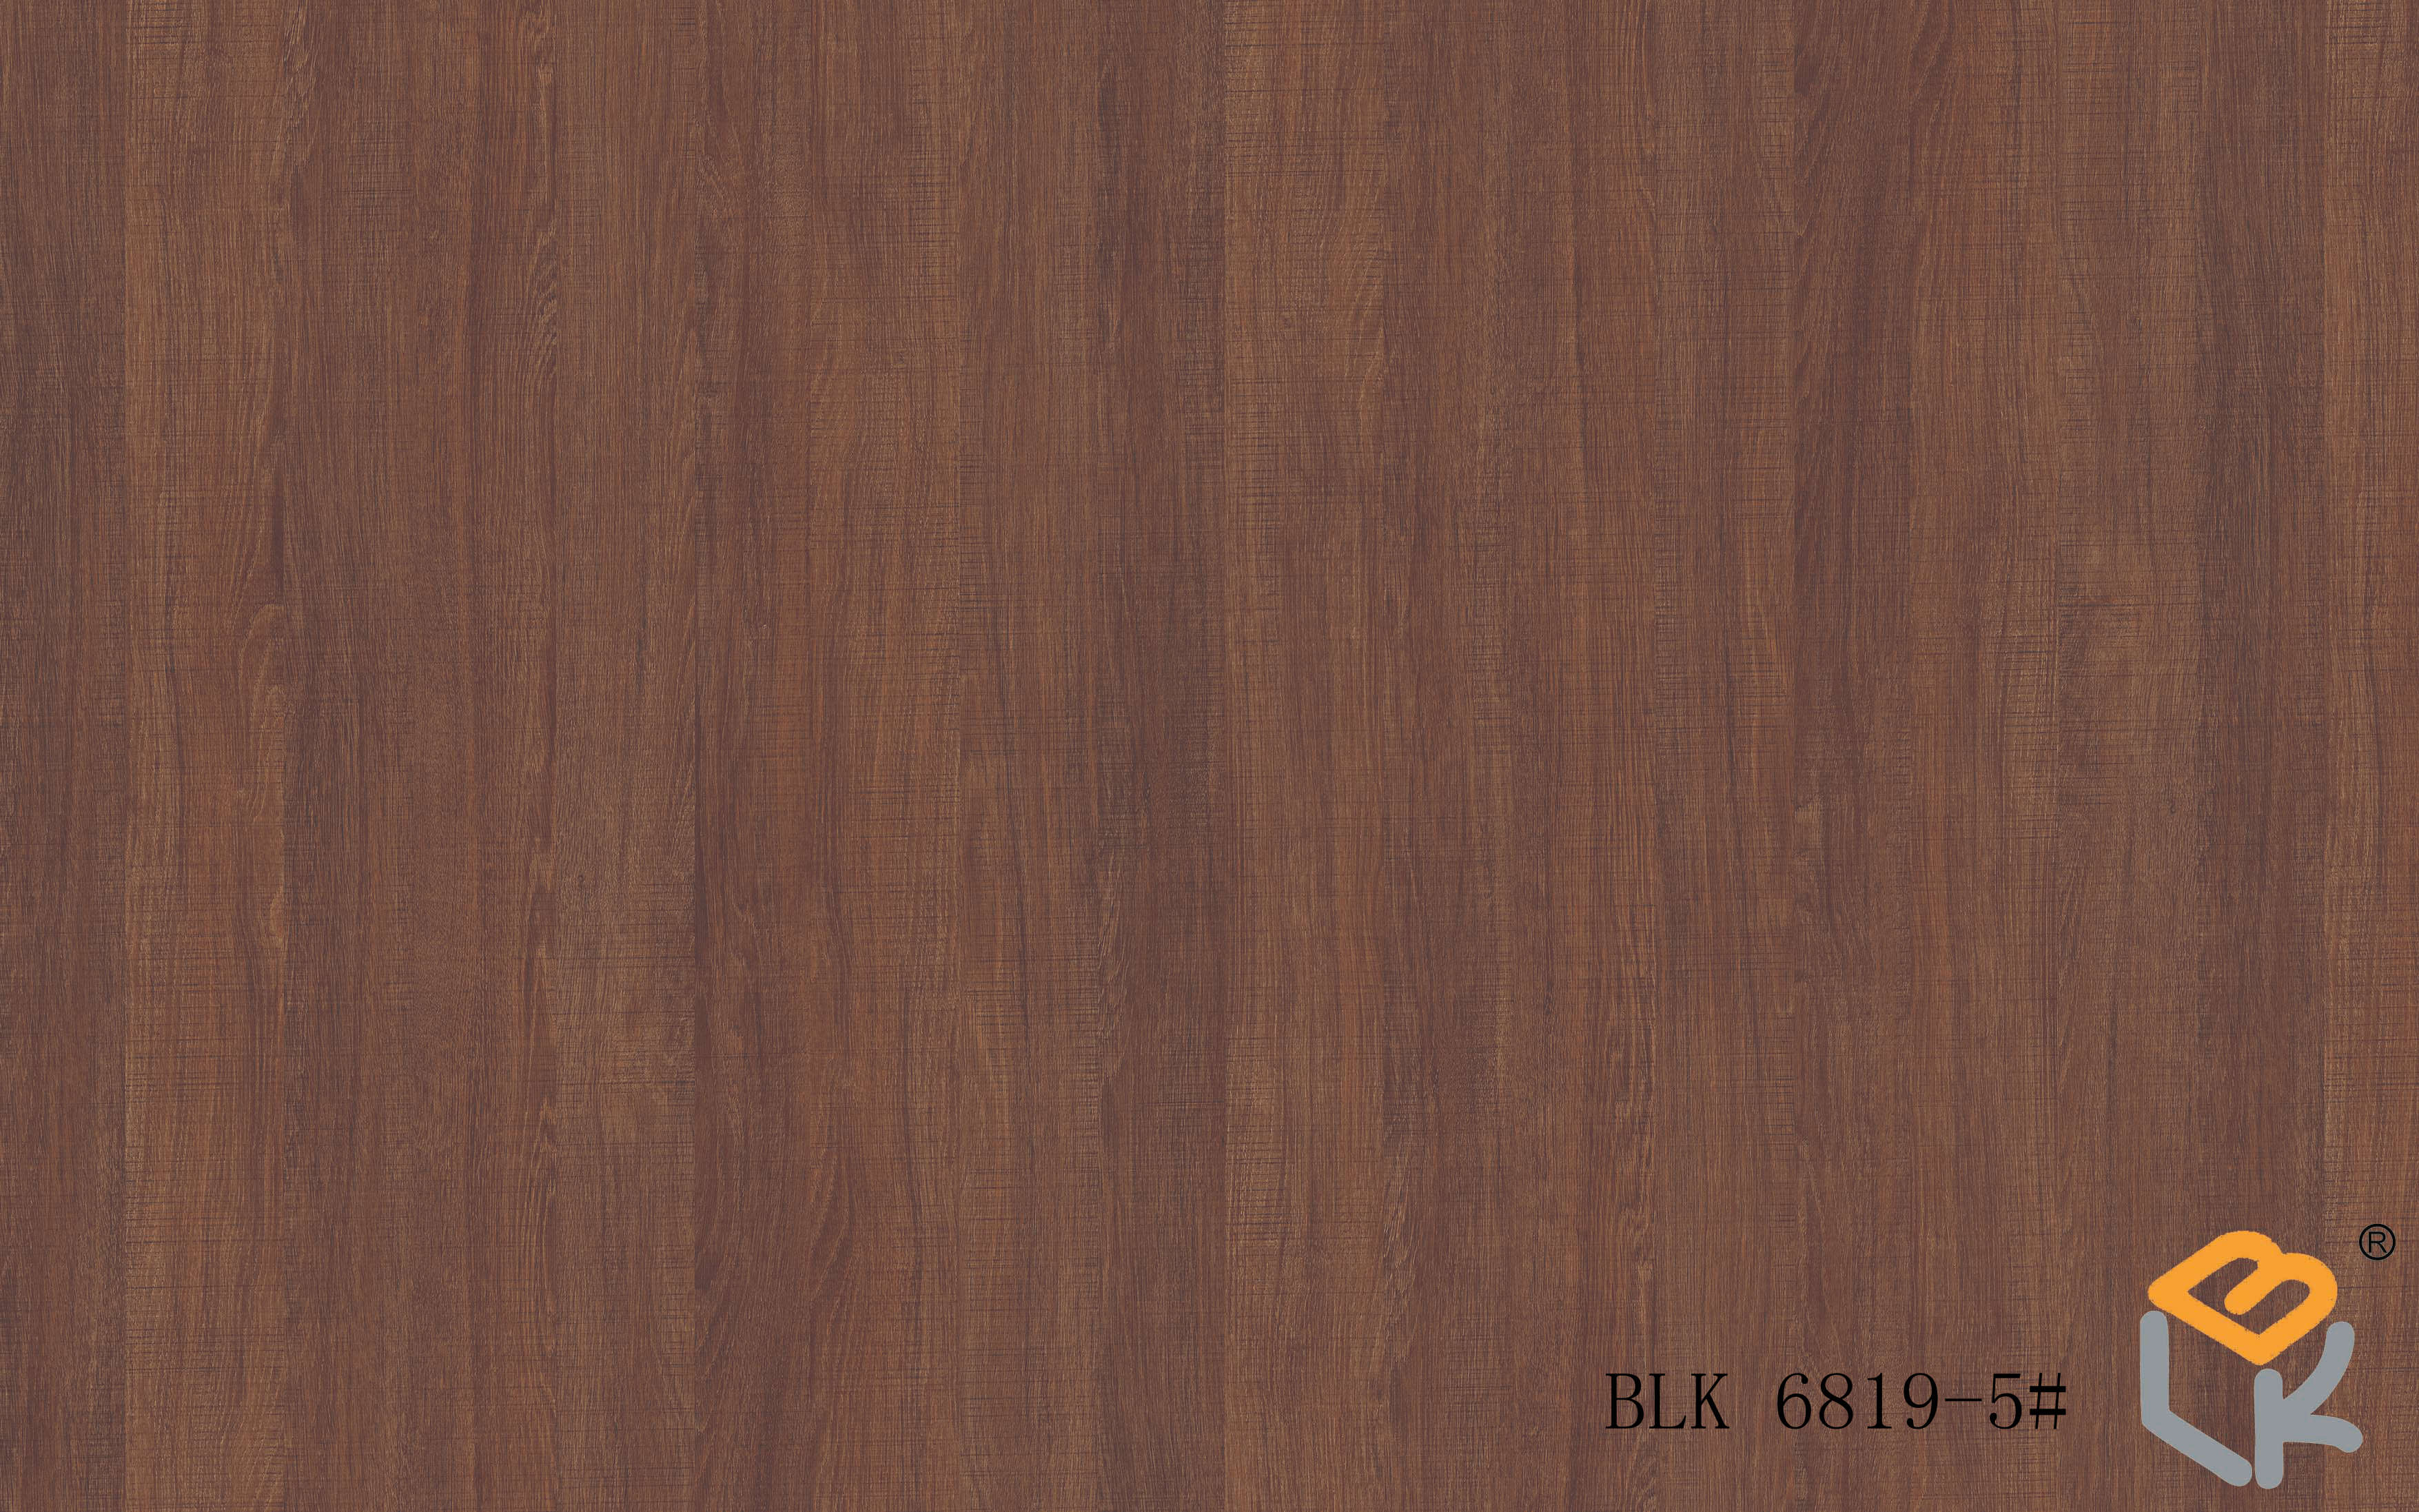 Cross oak grain surface plywood from BLK Decor